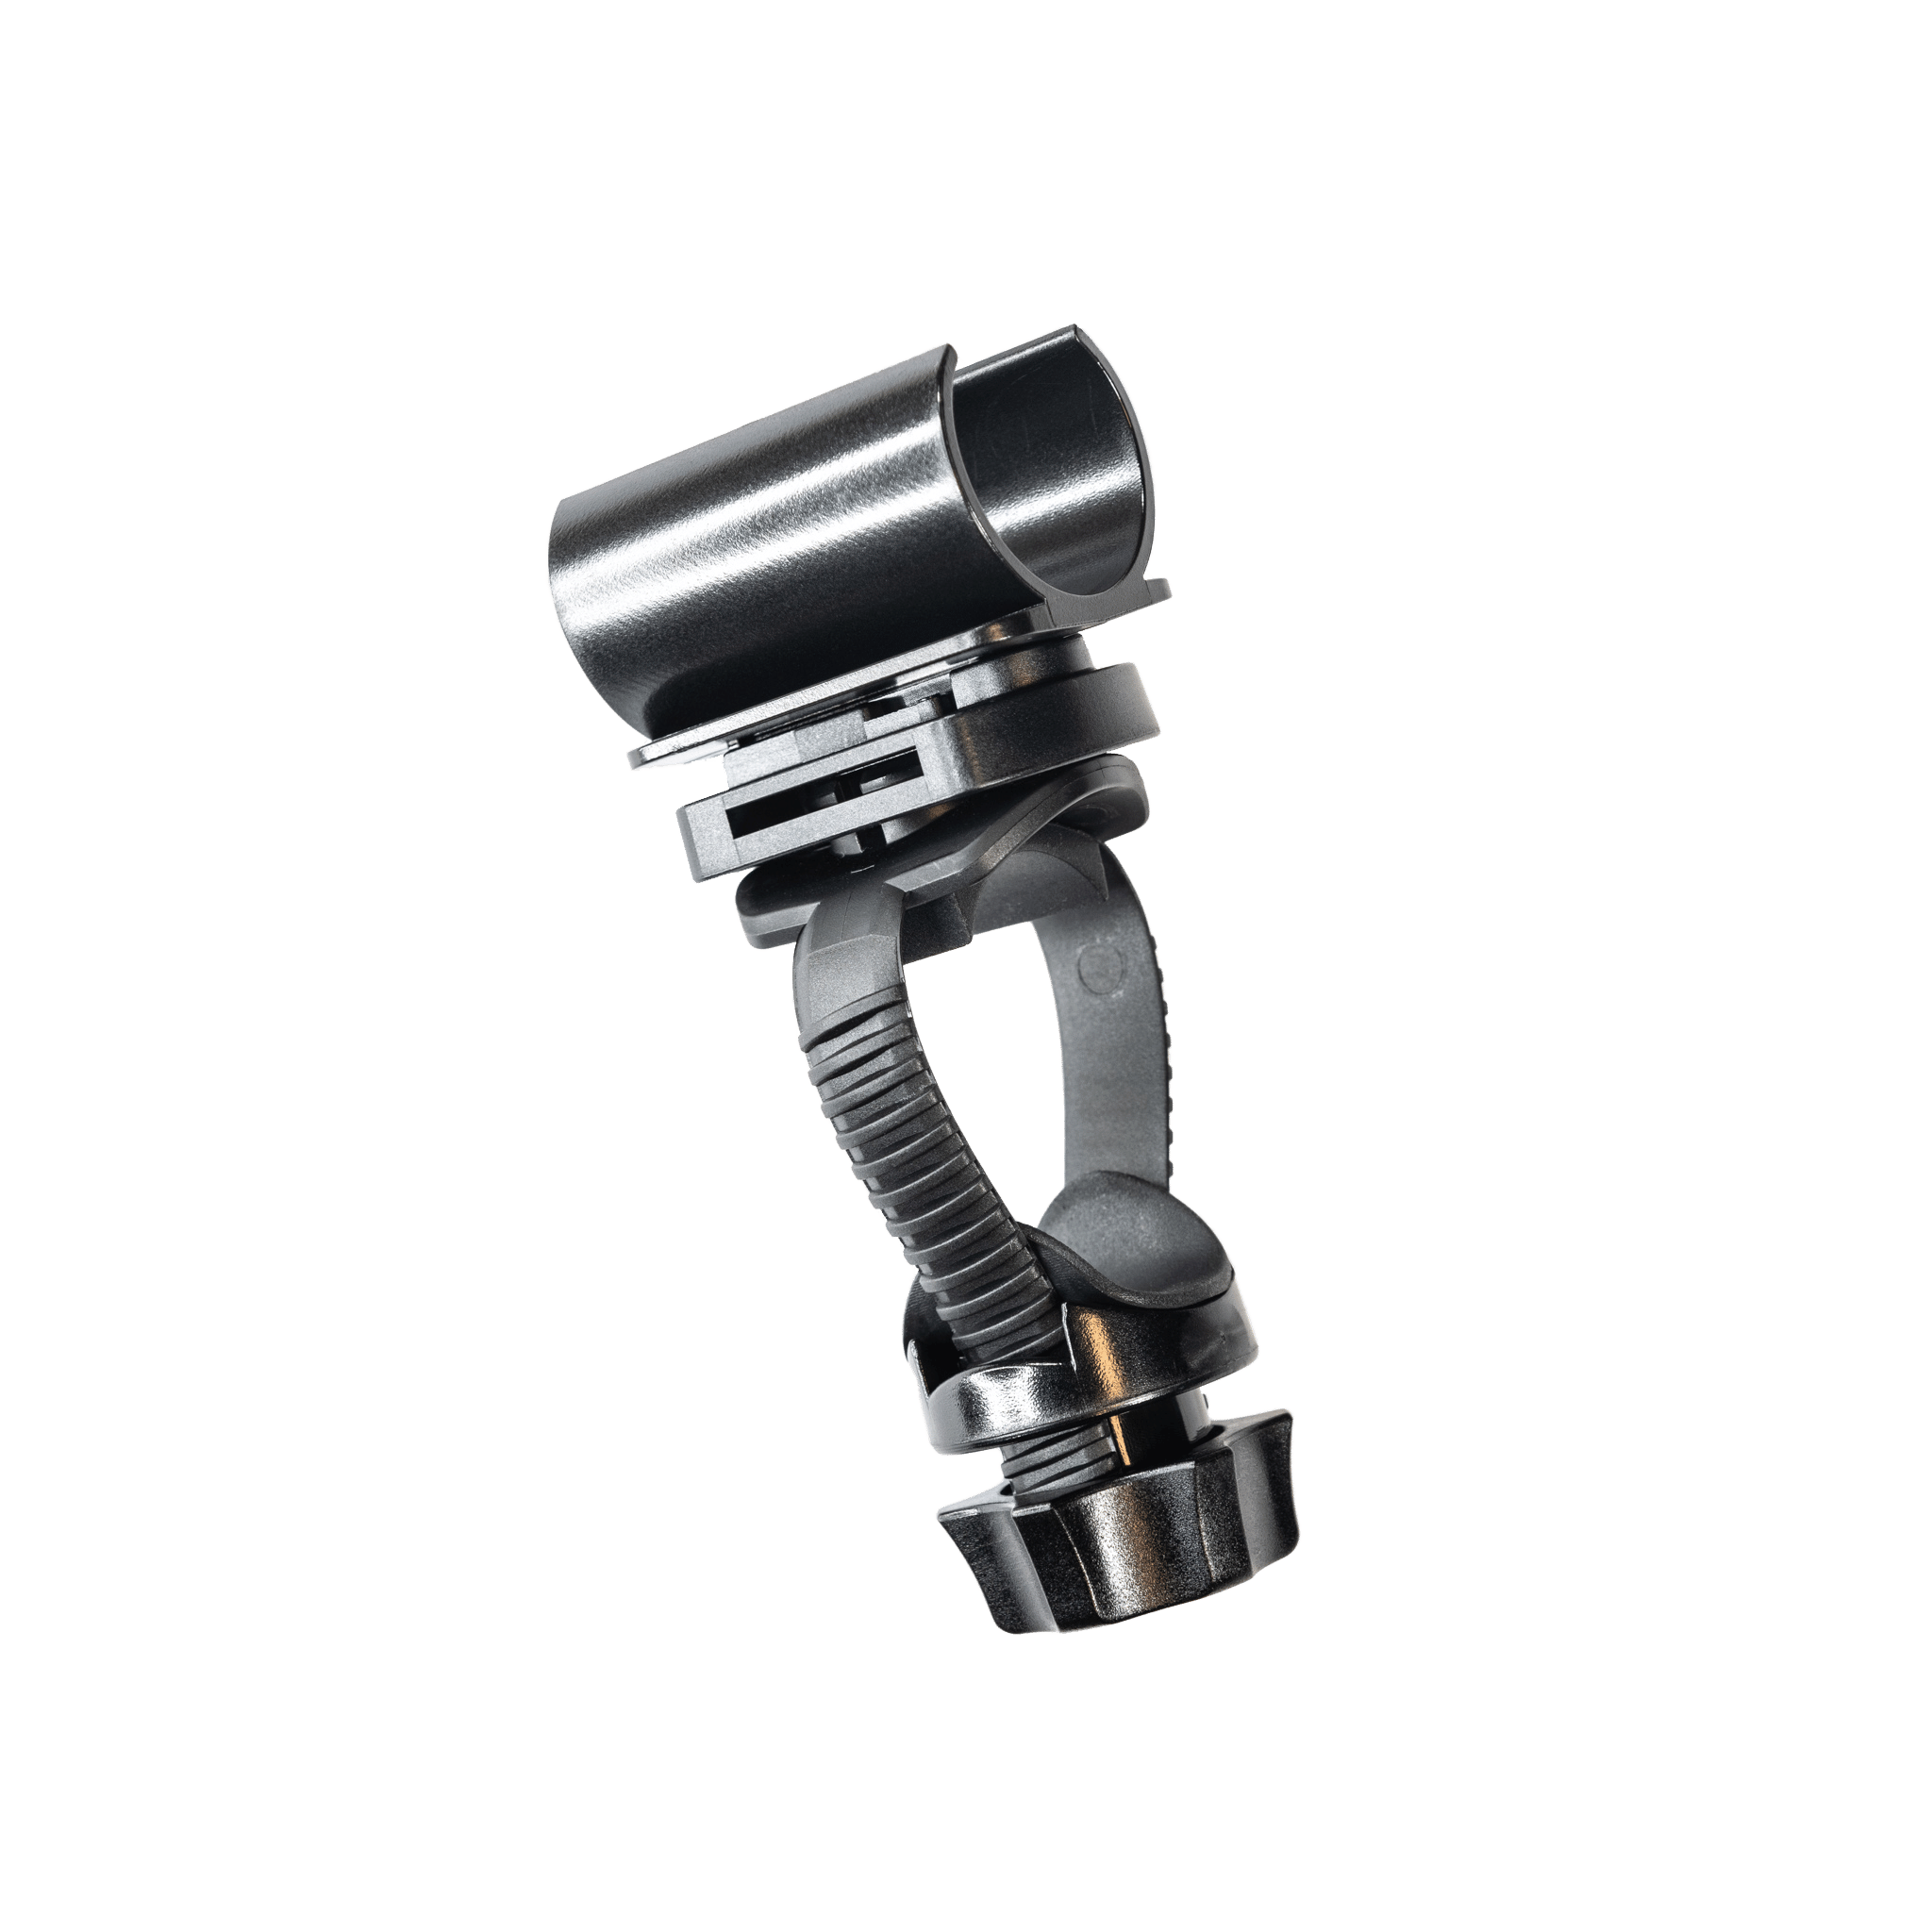 Universal Mounting Bracket Type E | Headlamp and Flashlight Mount